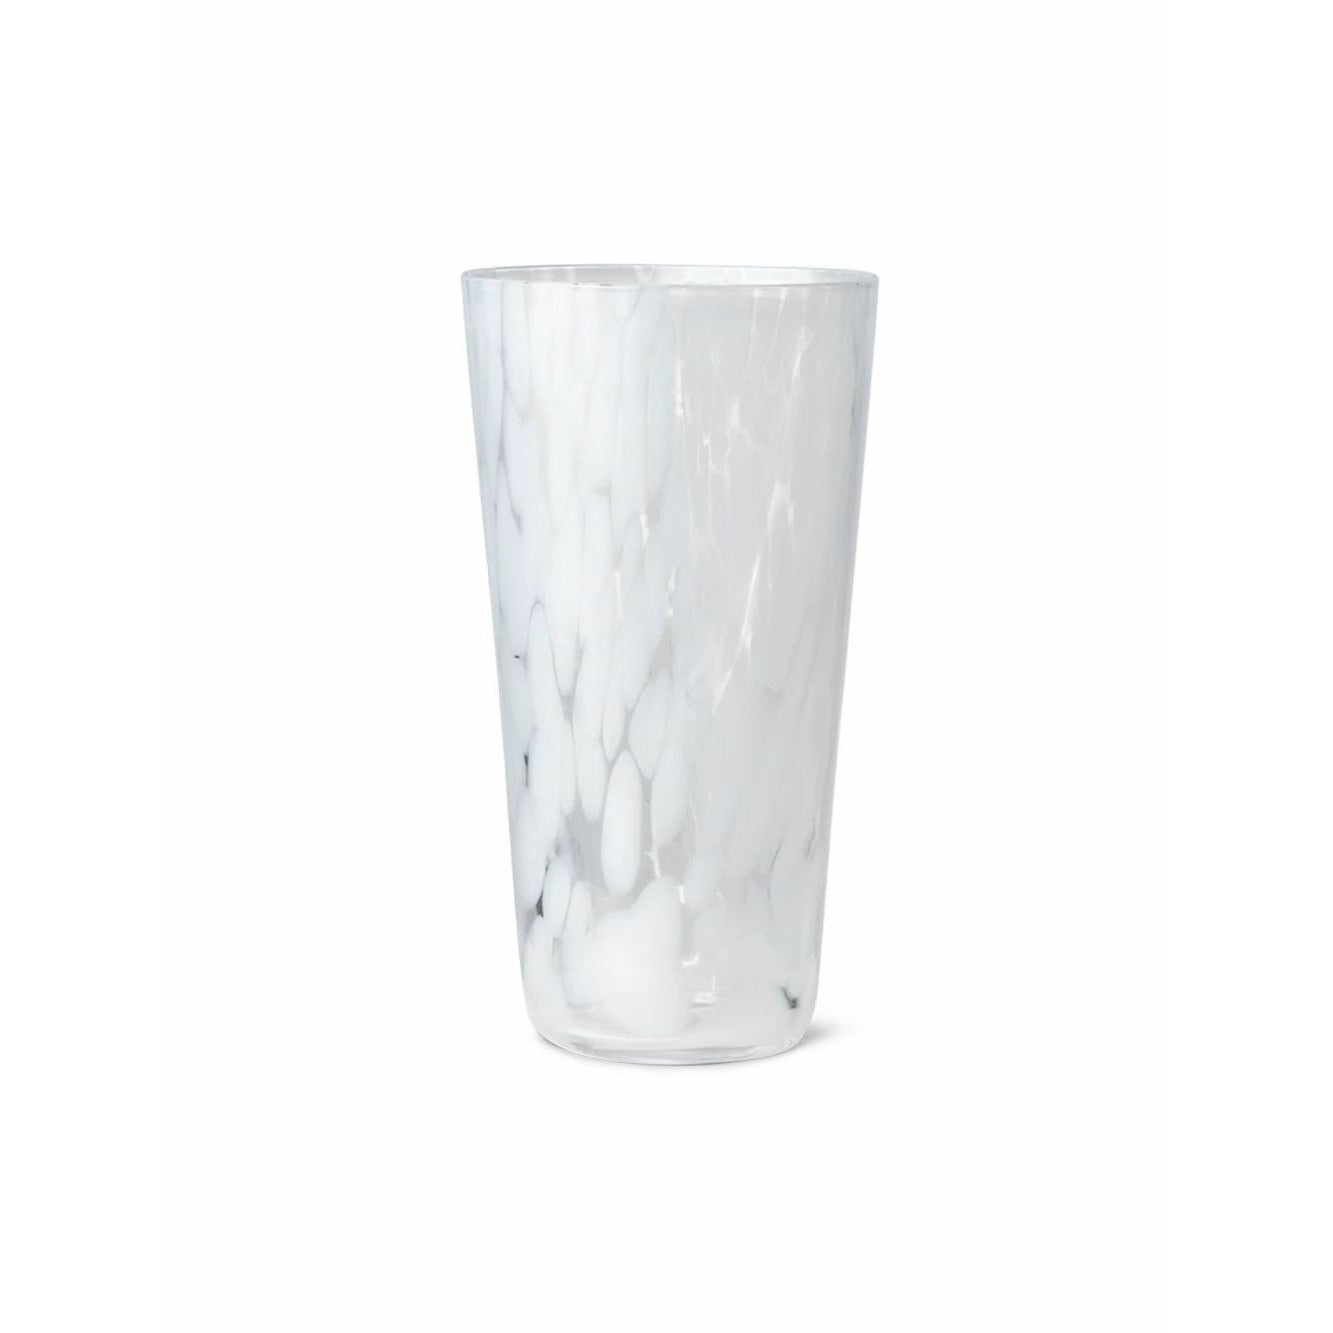 Ferm Living Casca Vase, Milk